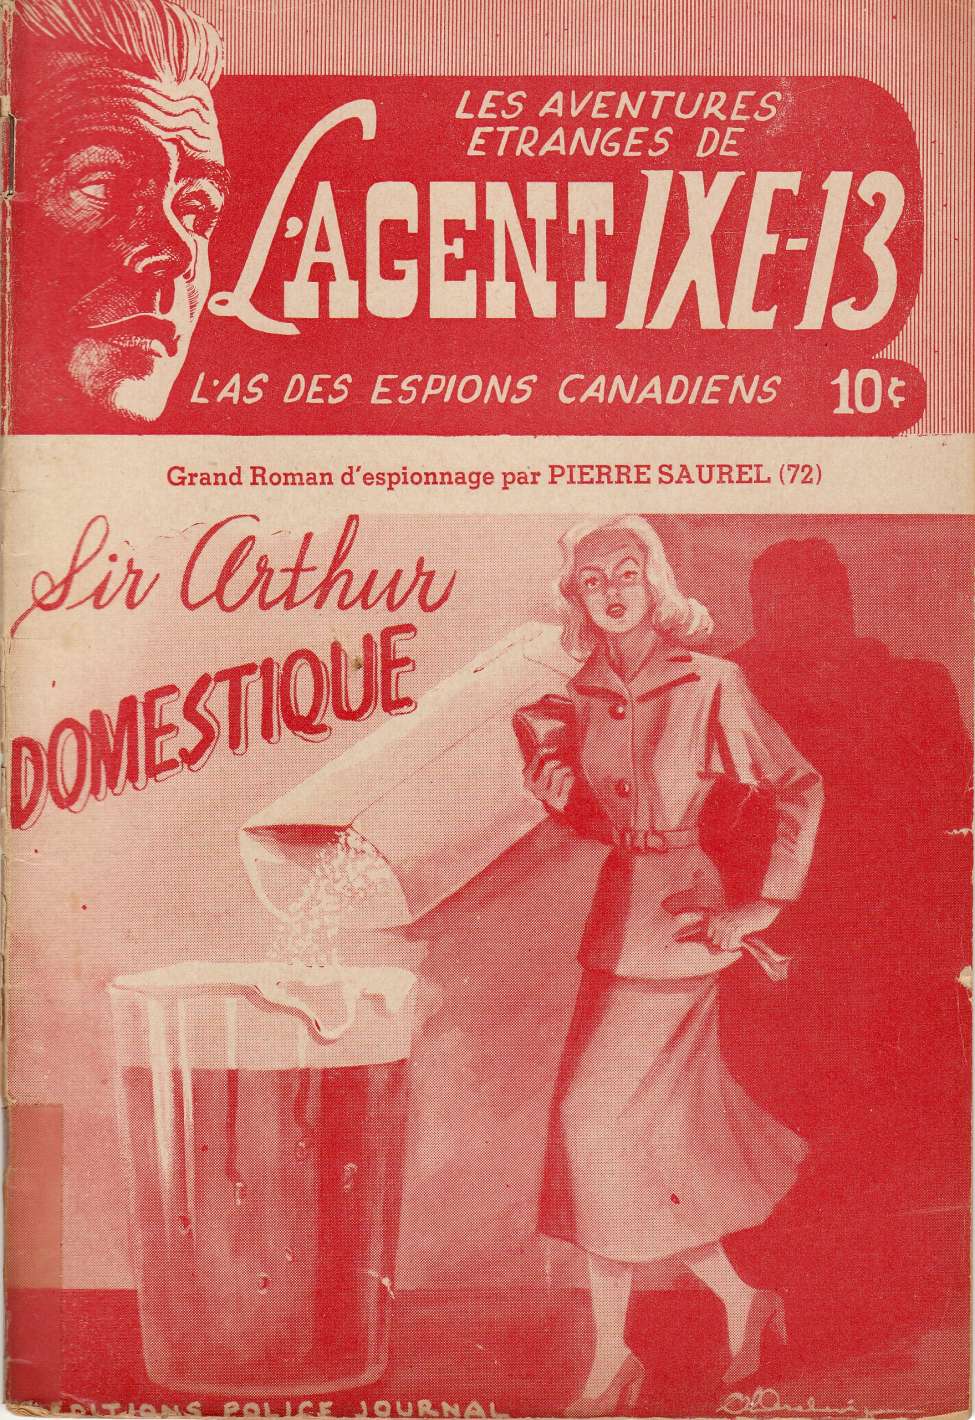 Comic Book Cover For L'Agent IXE-13 v2 72 - Sir Arthur domestique